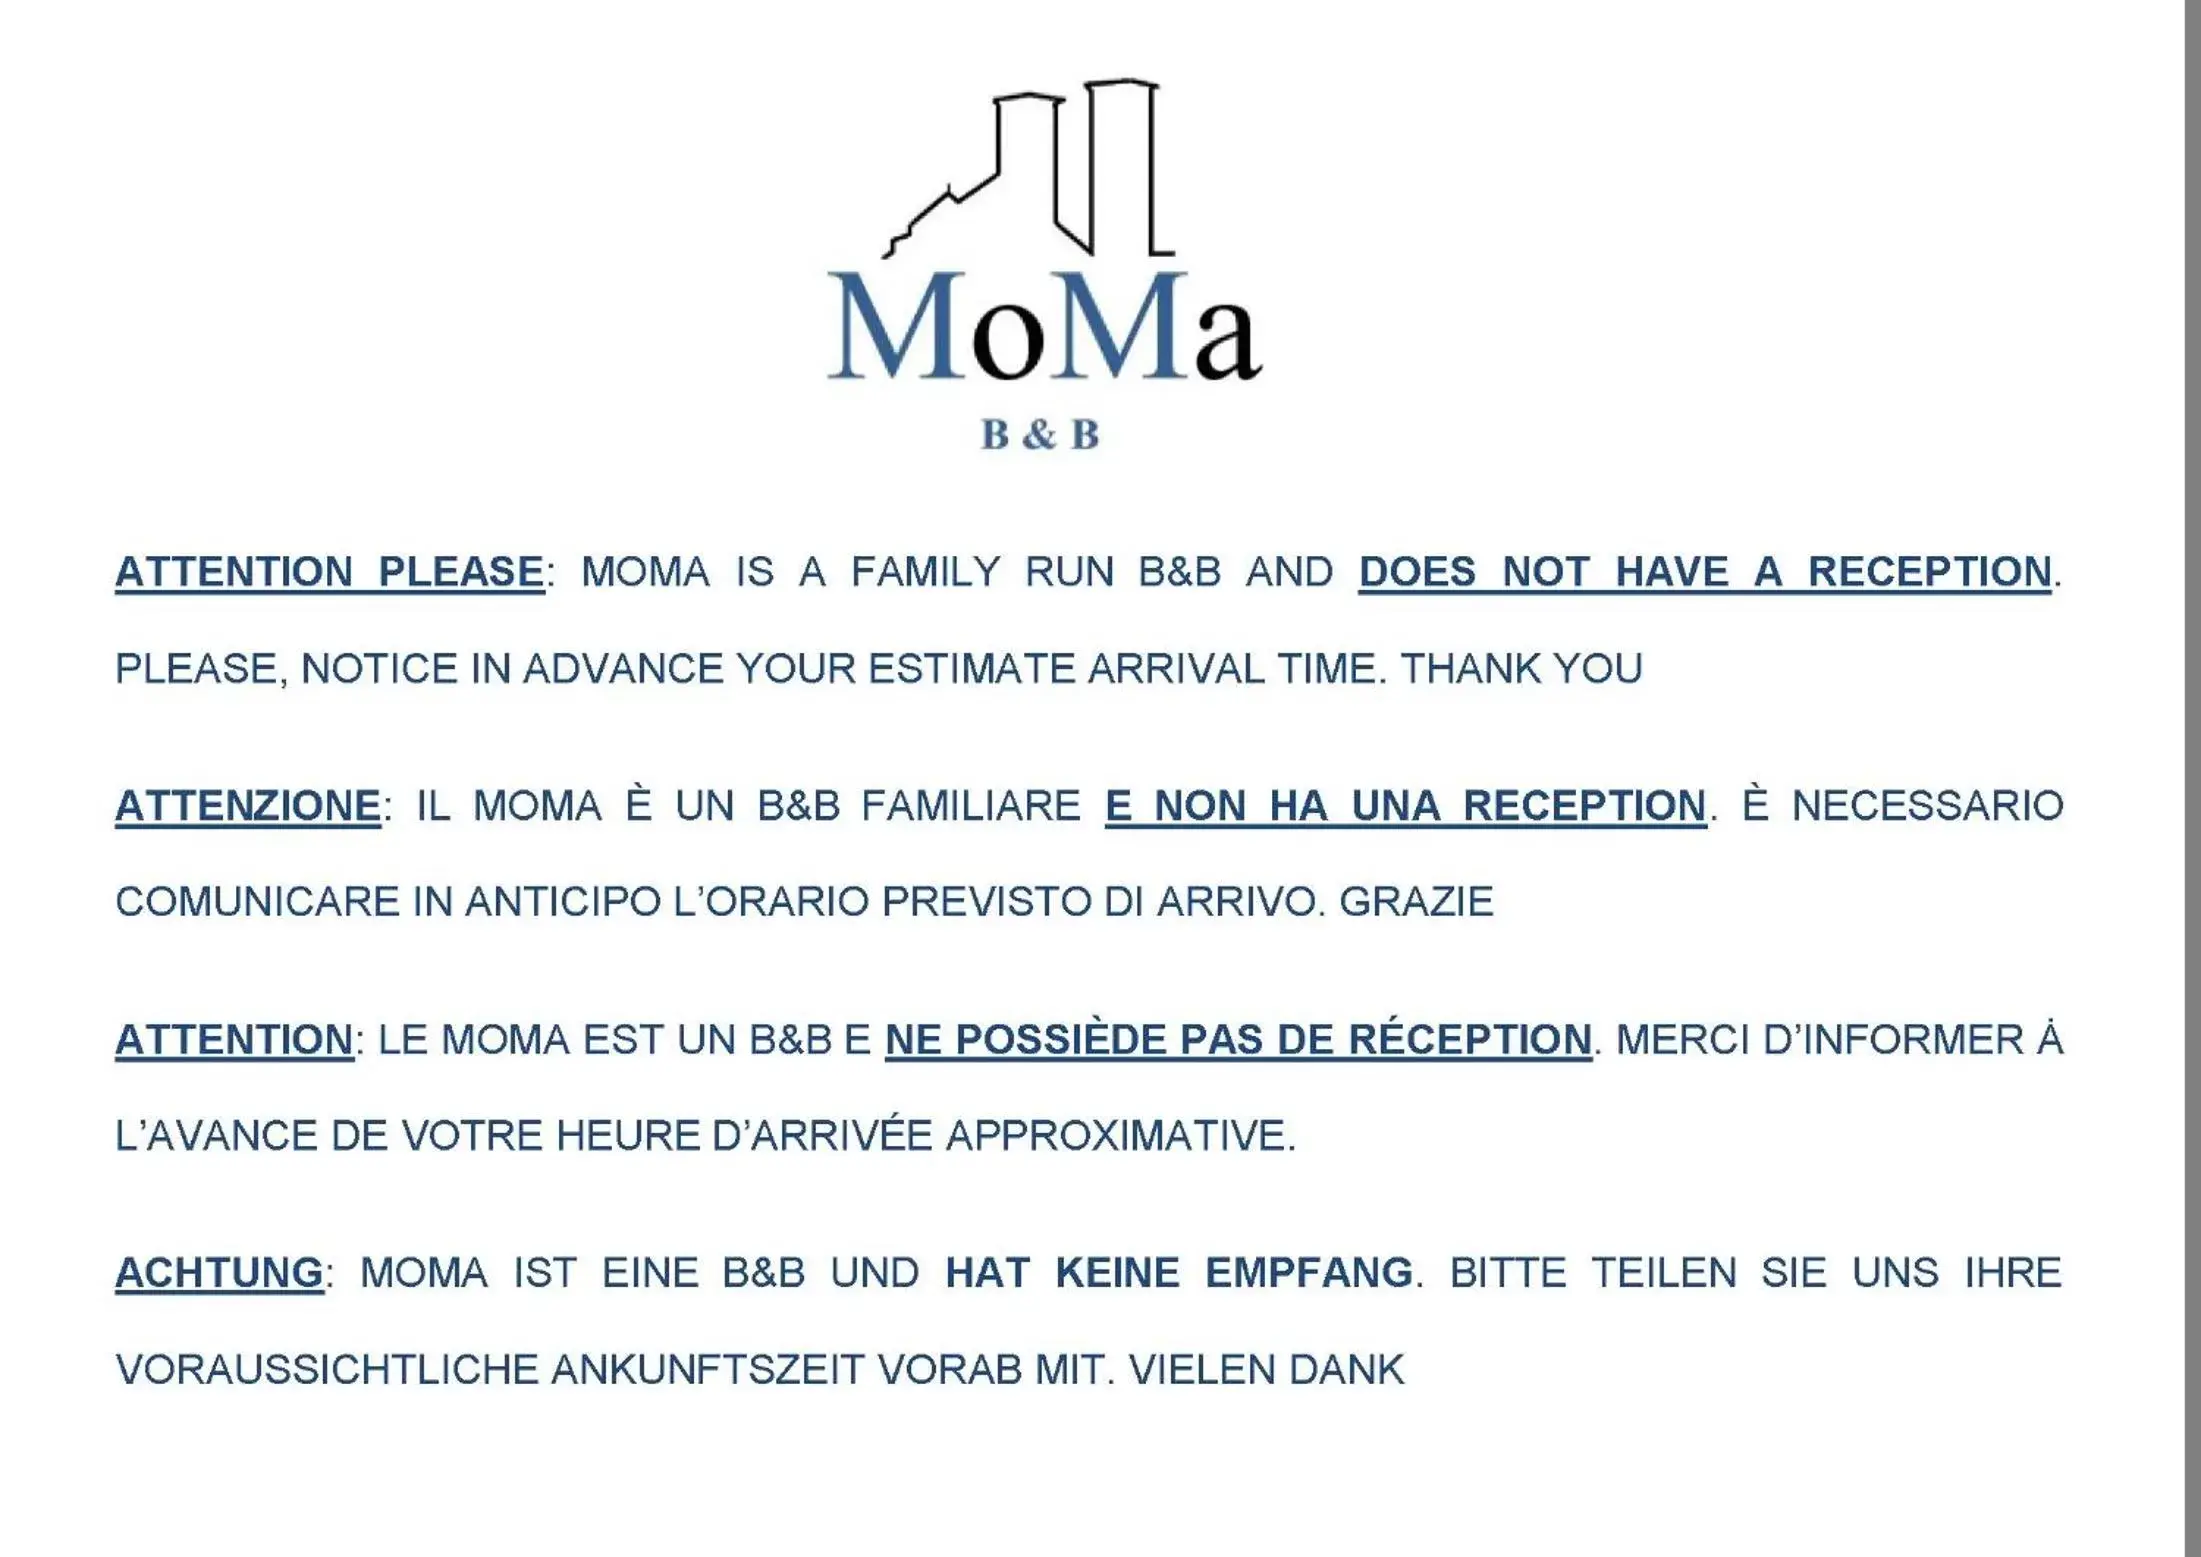 Text overlay in MoMa B&B Molfetta Mare